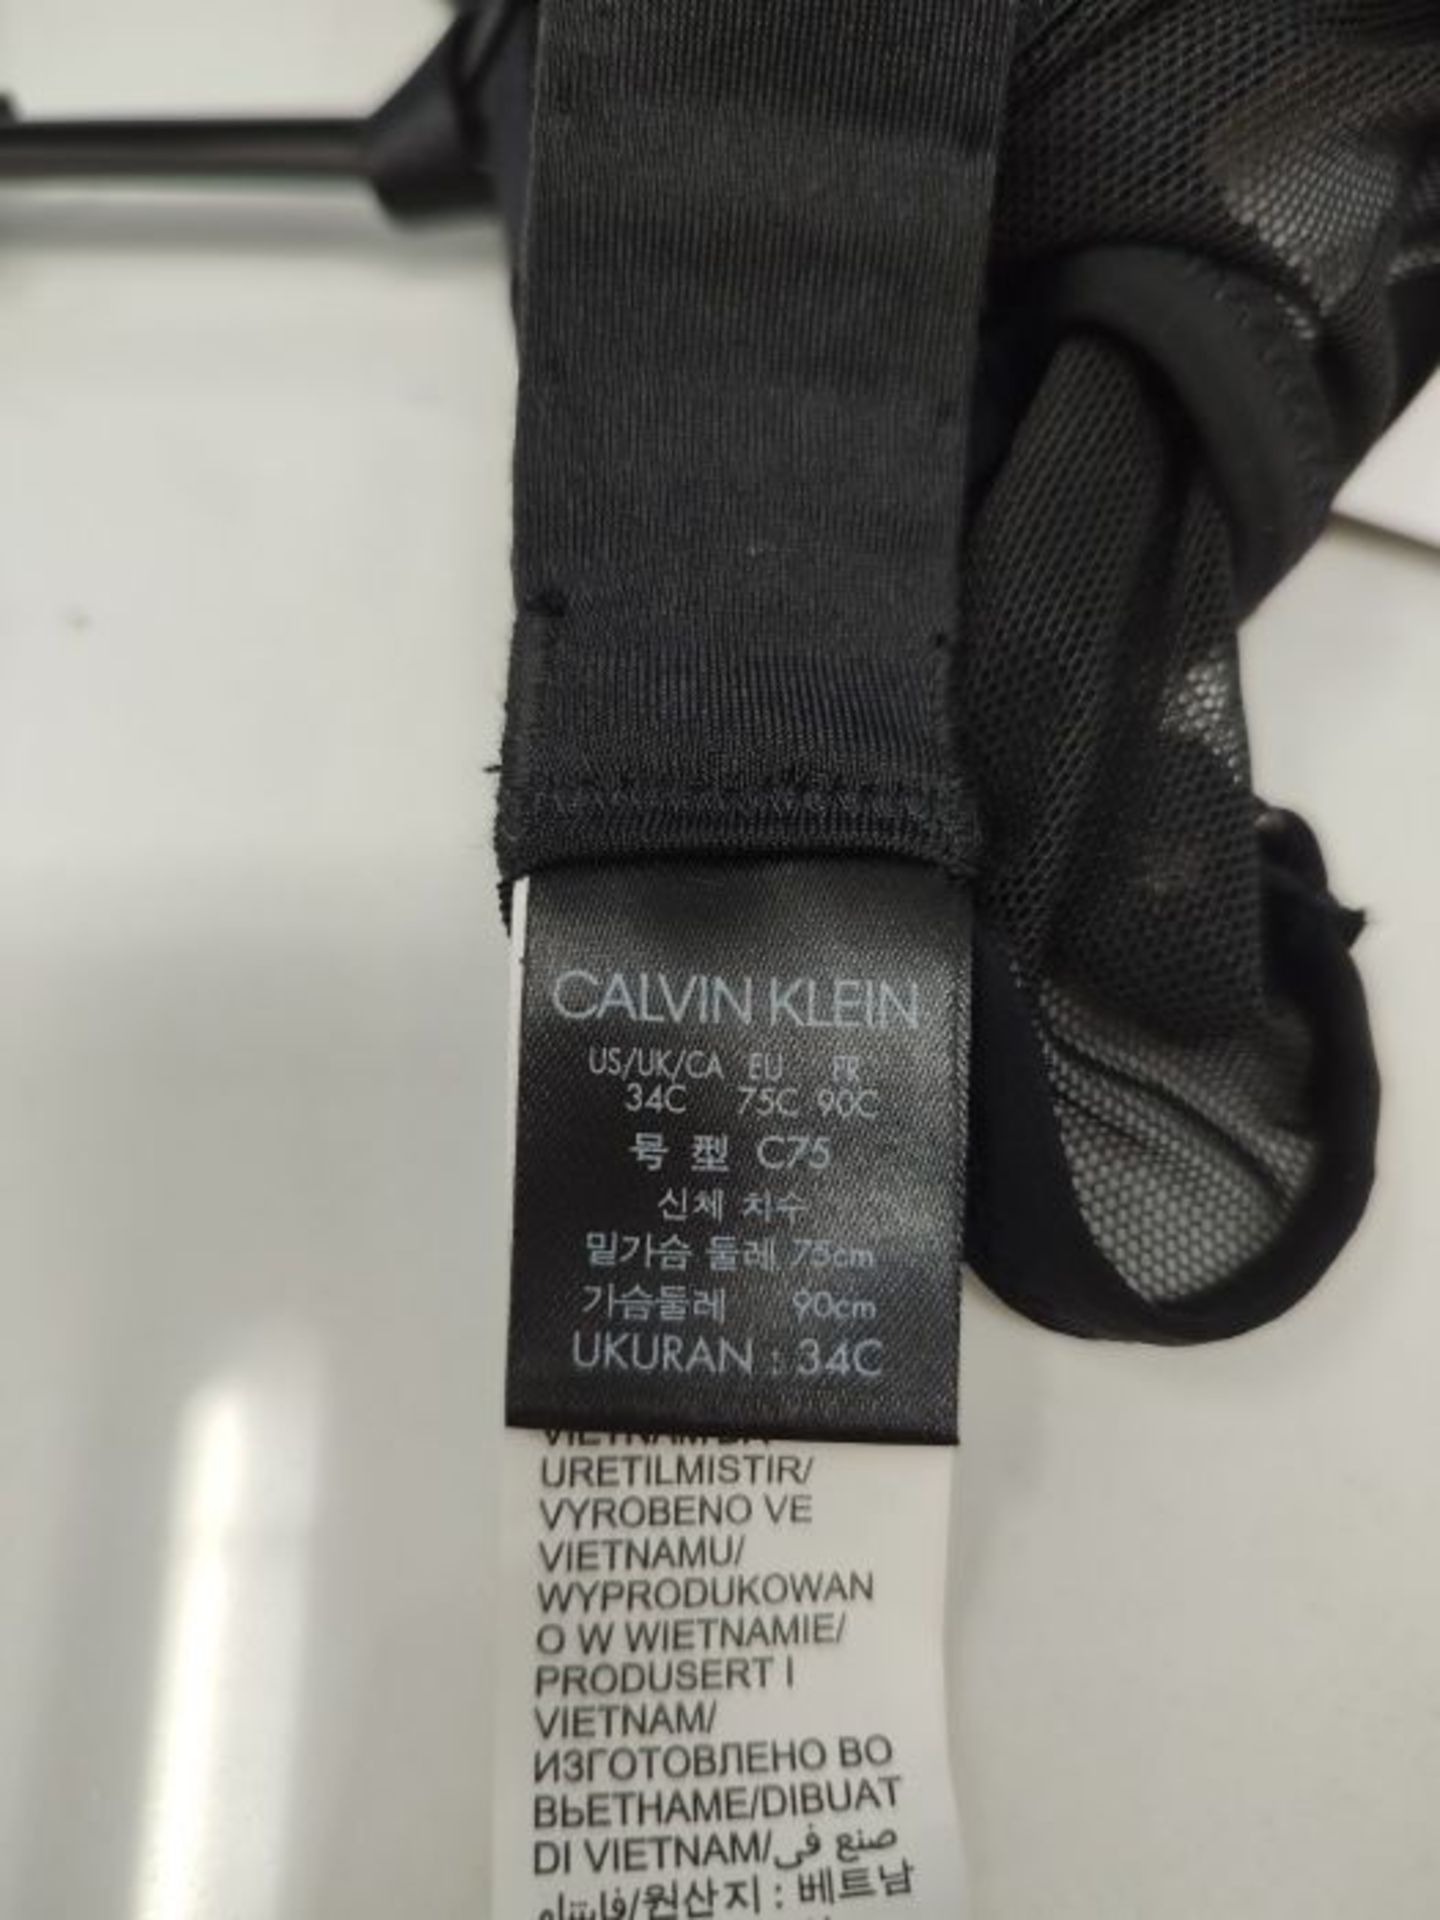 Calvin Klein - Sculpted T-Shirt Bra - Black - Adjustable Spaghetti Straps - 57% Polyam - Image 3 of 3